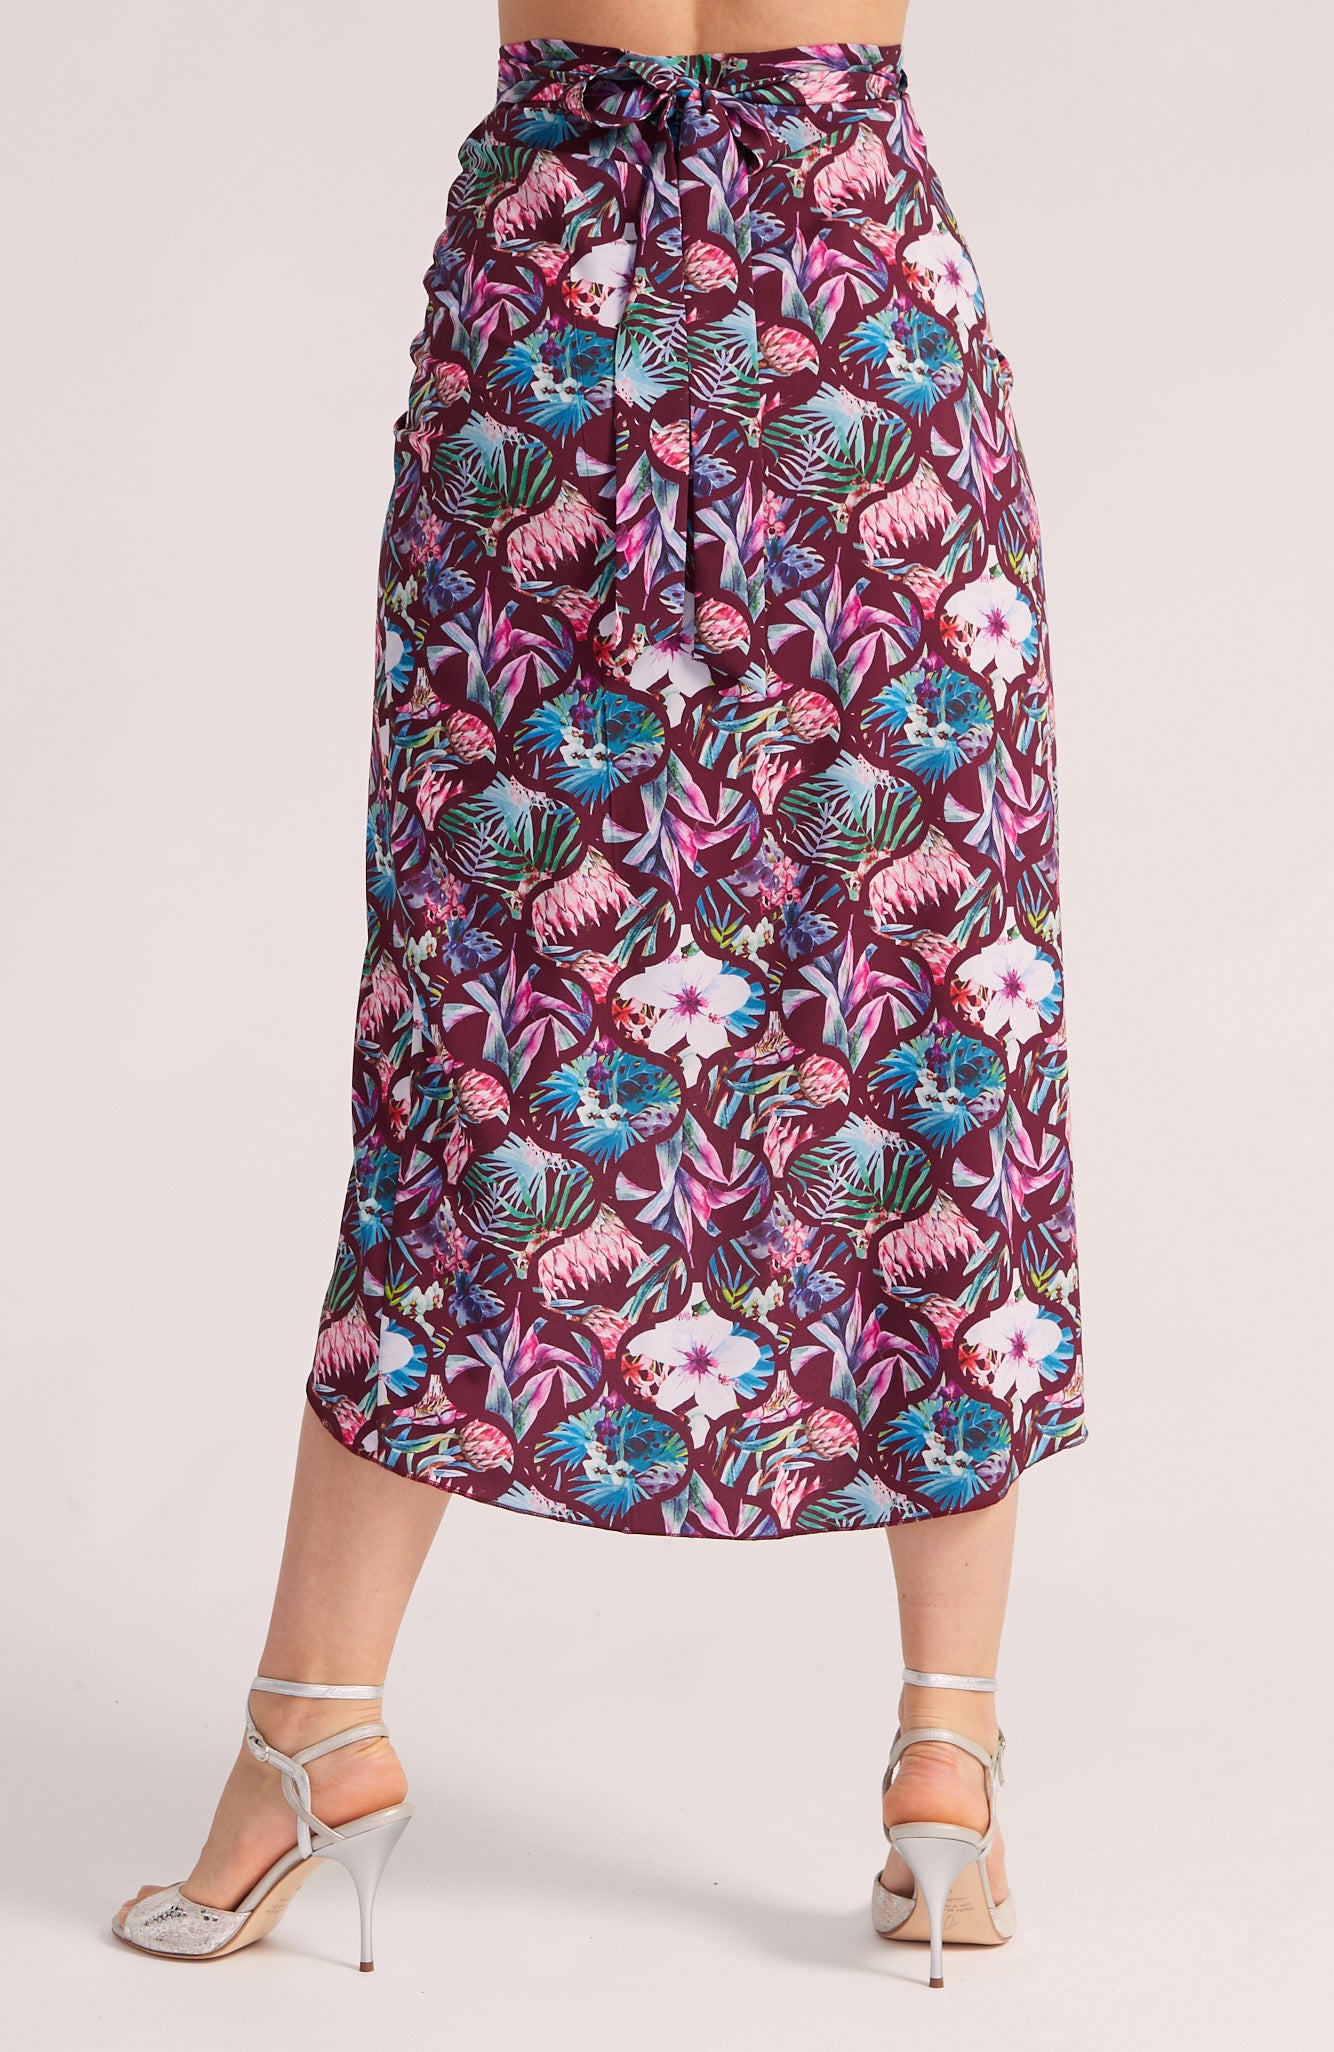 JULIET - Wrap Skirt in Bordeaux Red Print